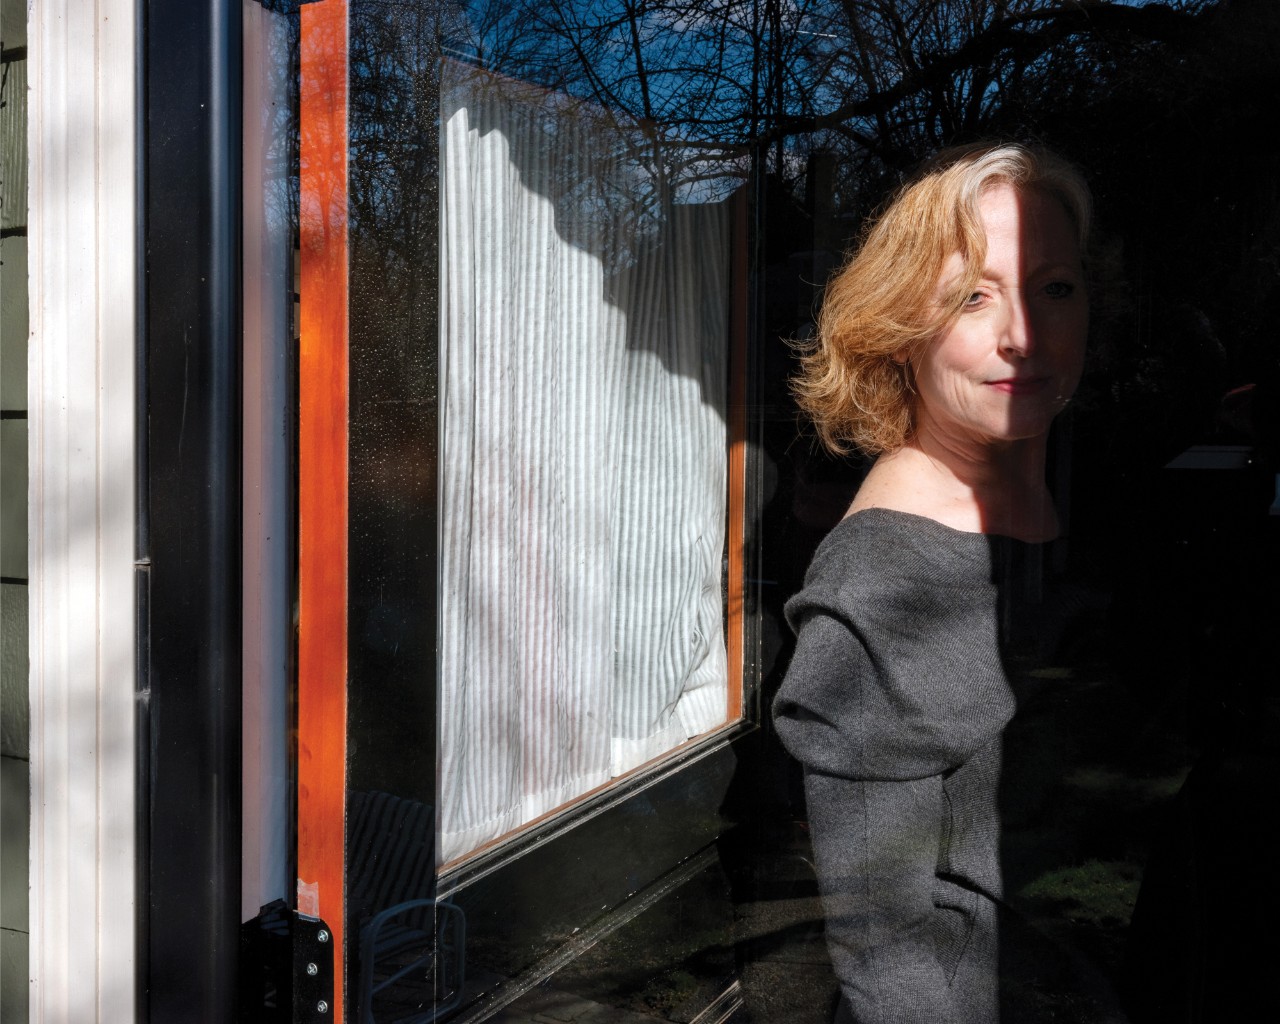 Figure 4. "Linda, Watertown, Massachusetts, 2020." Linda is half hidden in shadows as she opens her door for a look outside.